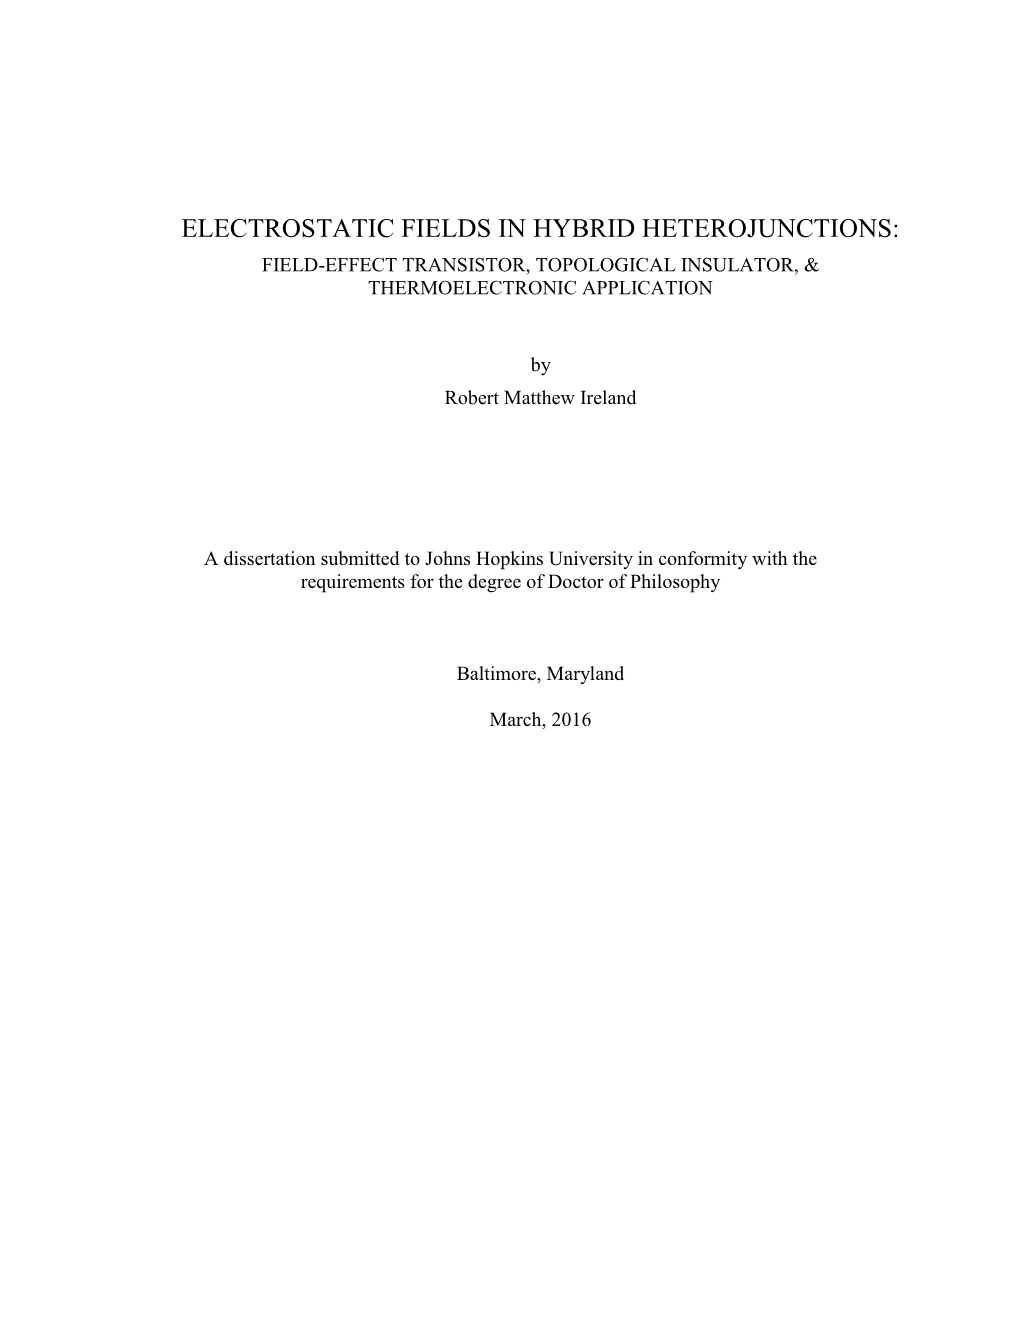 Electrostatic Fields in Hybrid Heterojunctions: Field-Effect Transistor, Topological Insulator, & Thermoelectronic Application